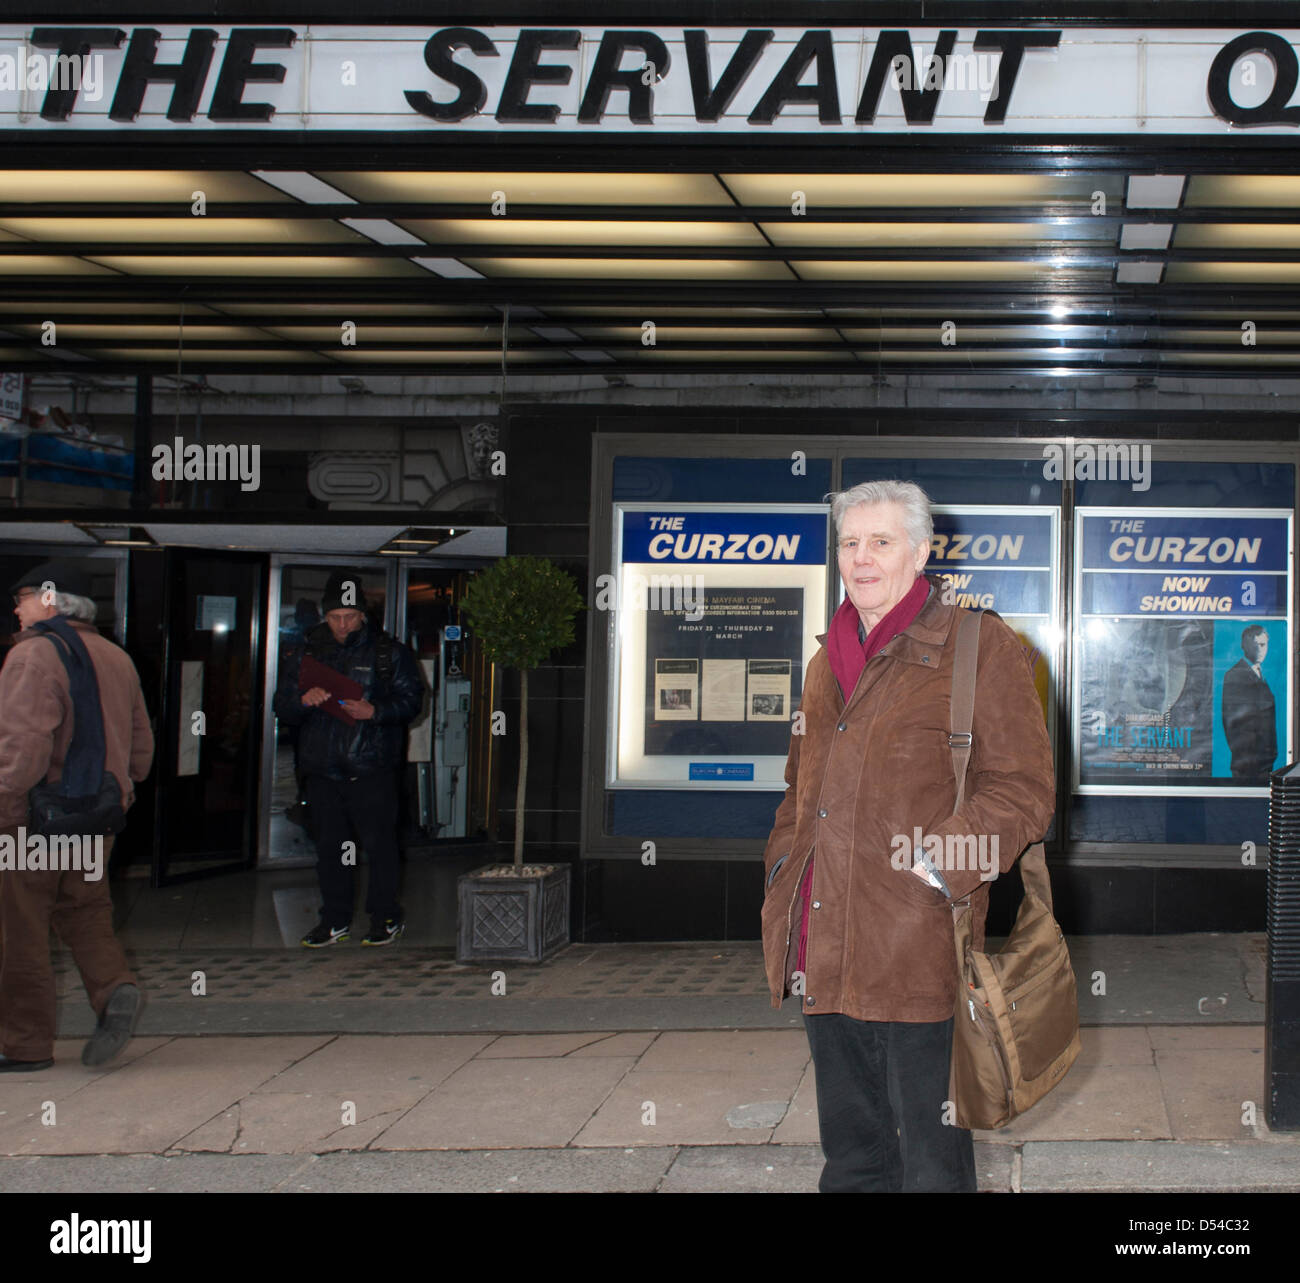 James Fox The Servant, Special Screening plus Q&A mit Sternen an Curzon Mayfair. London, UK. 24. März 2013. Stockfoto